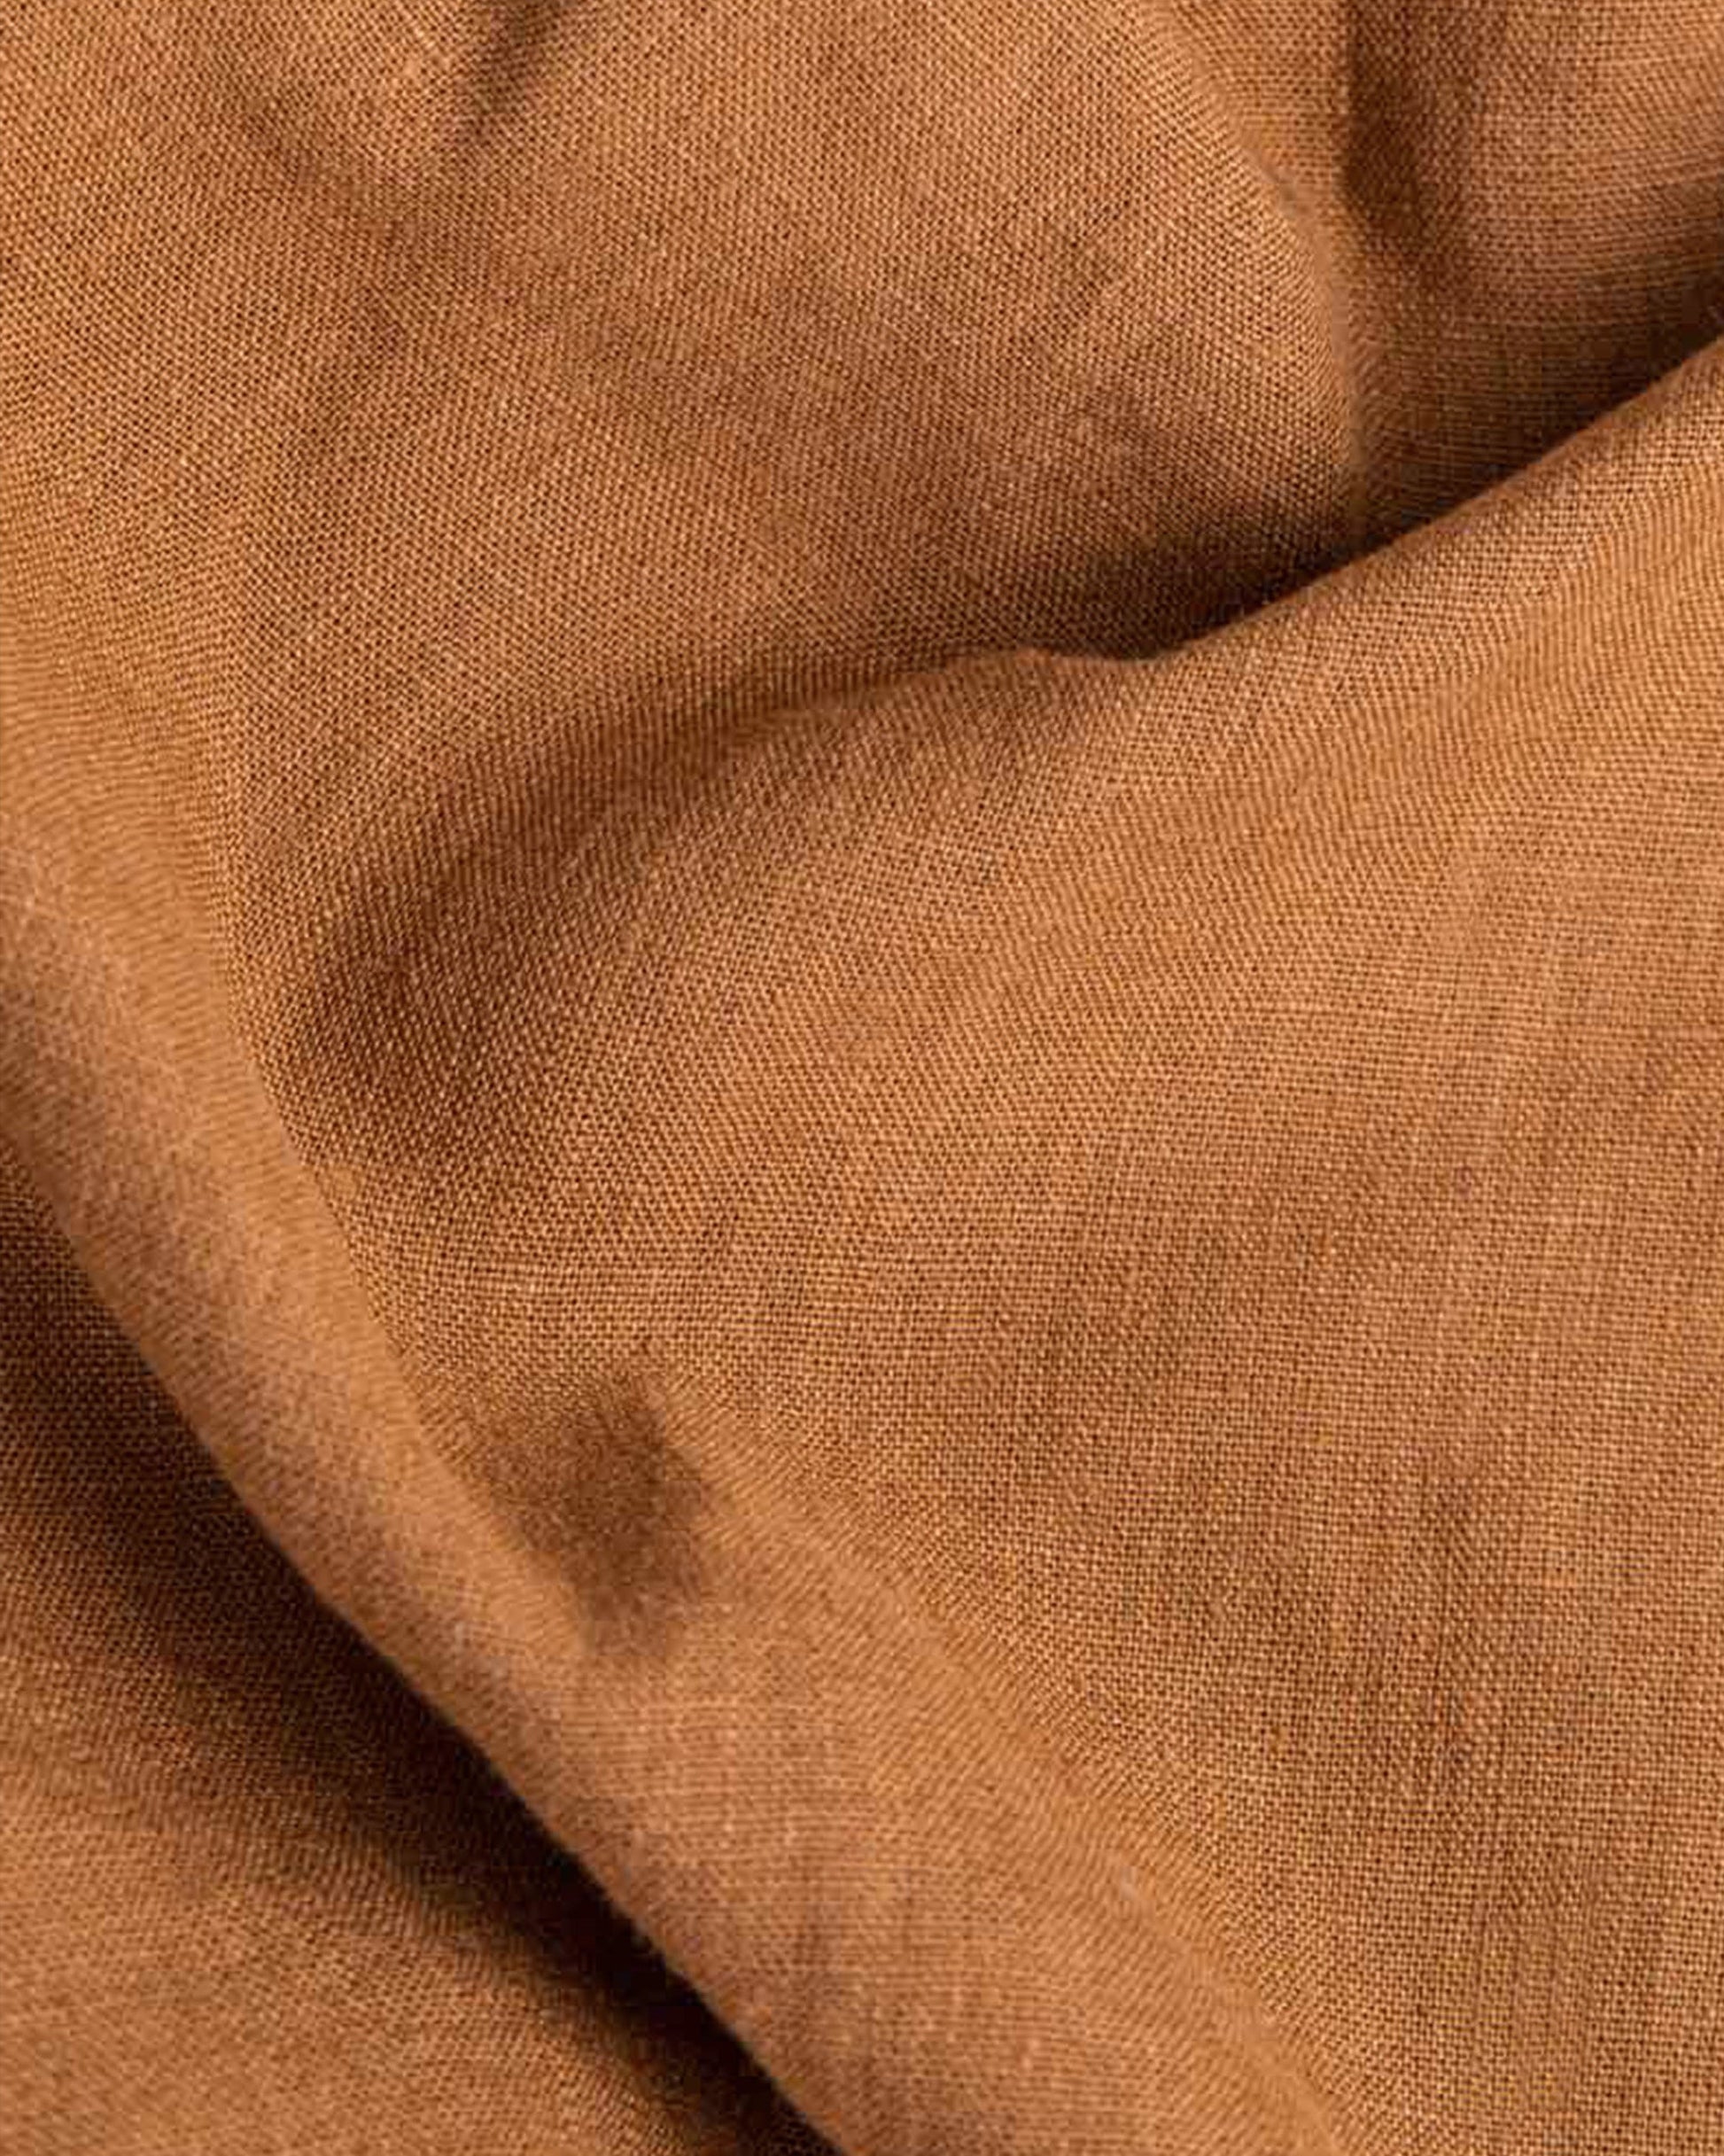 Cinnamon linen duvet cover set (3 pcs) - MagicLinen